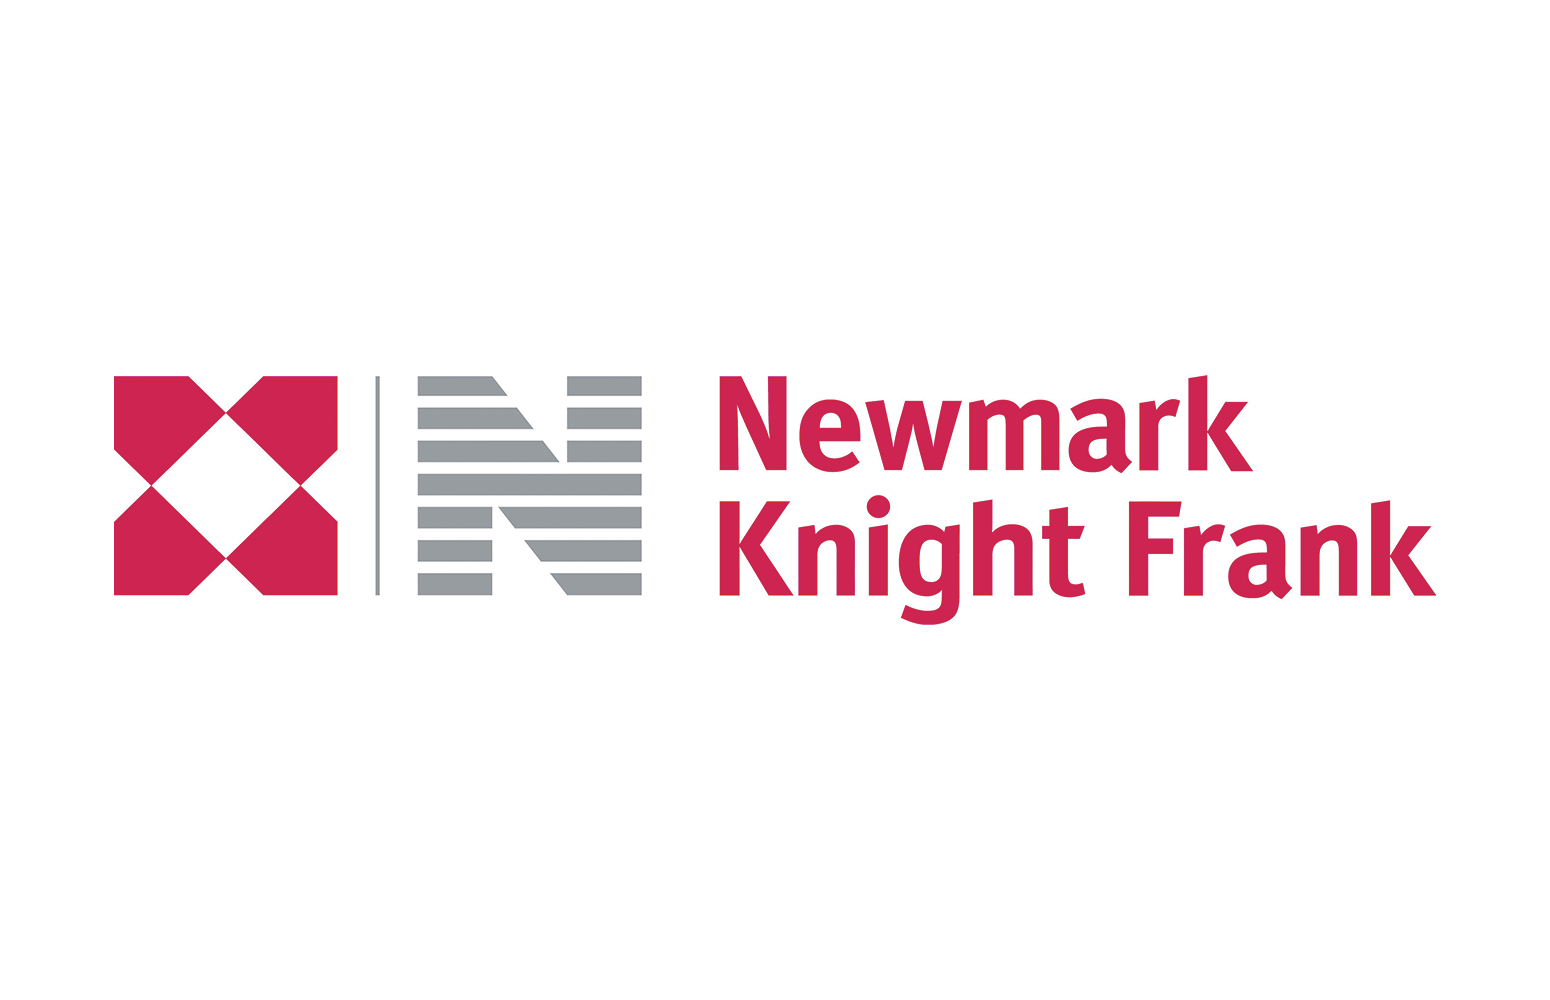 Newmark Knight Frank